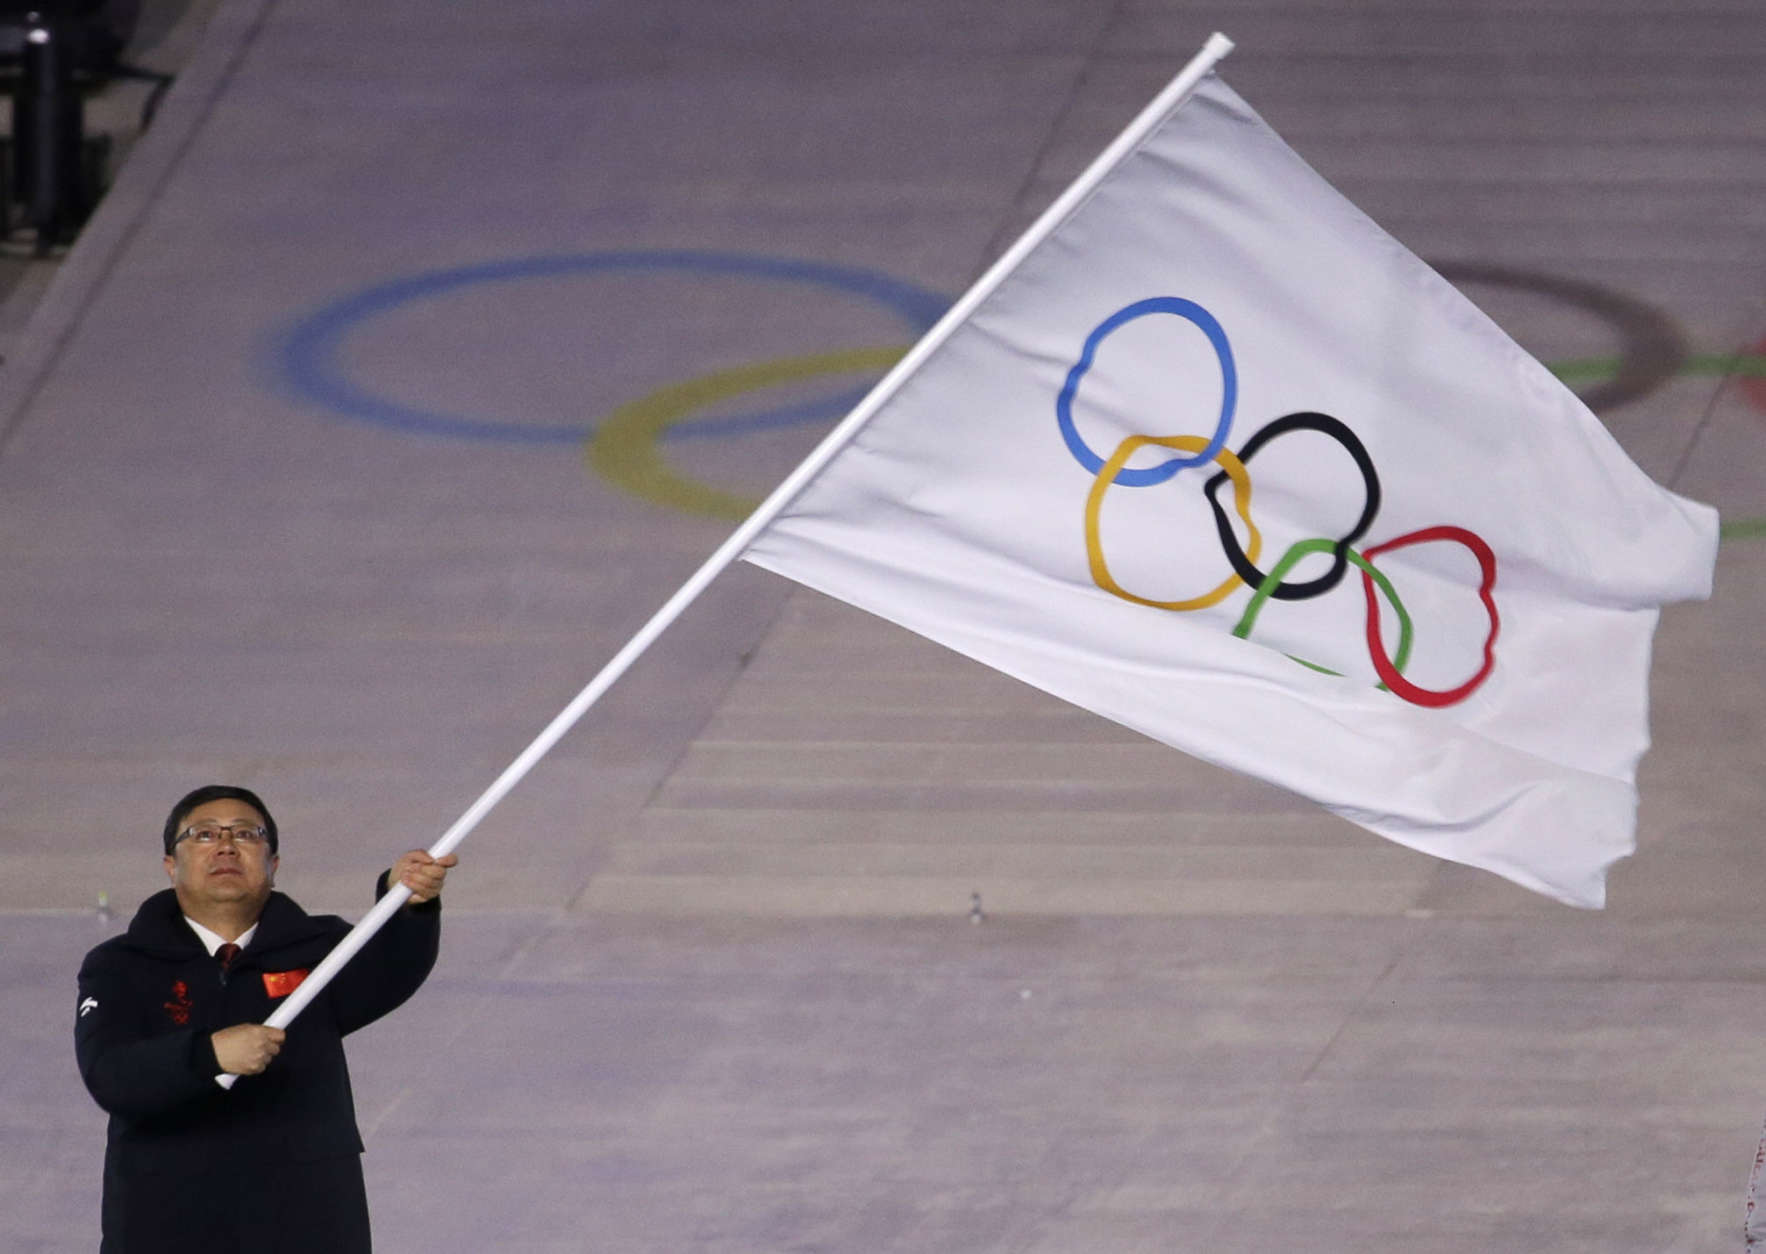 Chen Jining mayor of Beijing waves the Olympic flag during the closing ceremony of the 2018 Winter Olympics in Pyeongchang, South Korea, Sunday, Feb. 25, 2018. (AP Photo/Natacha Pisarenko)